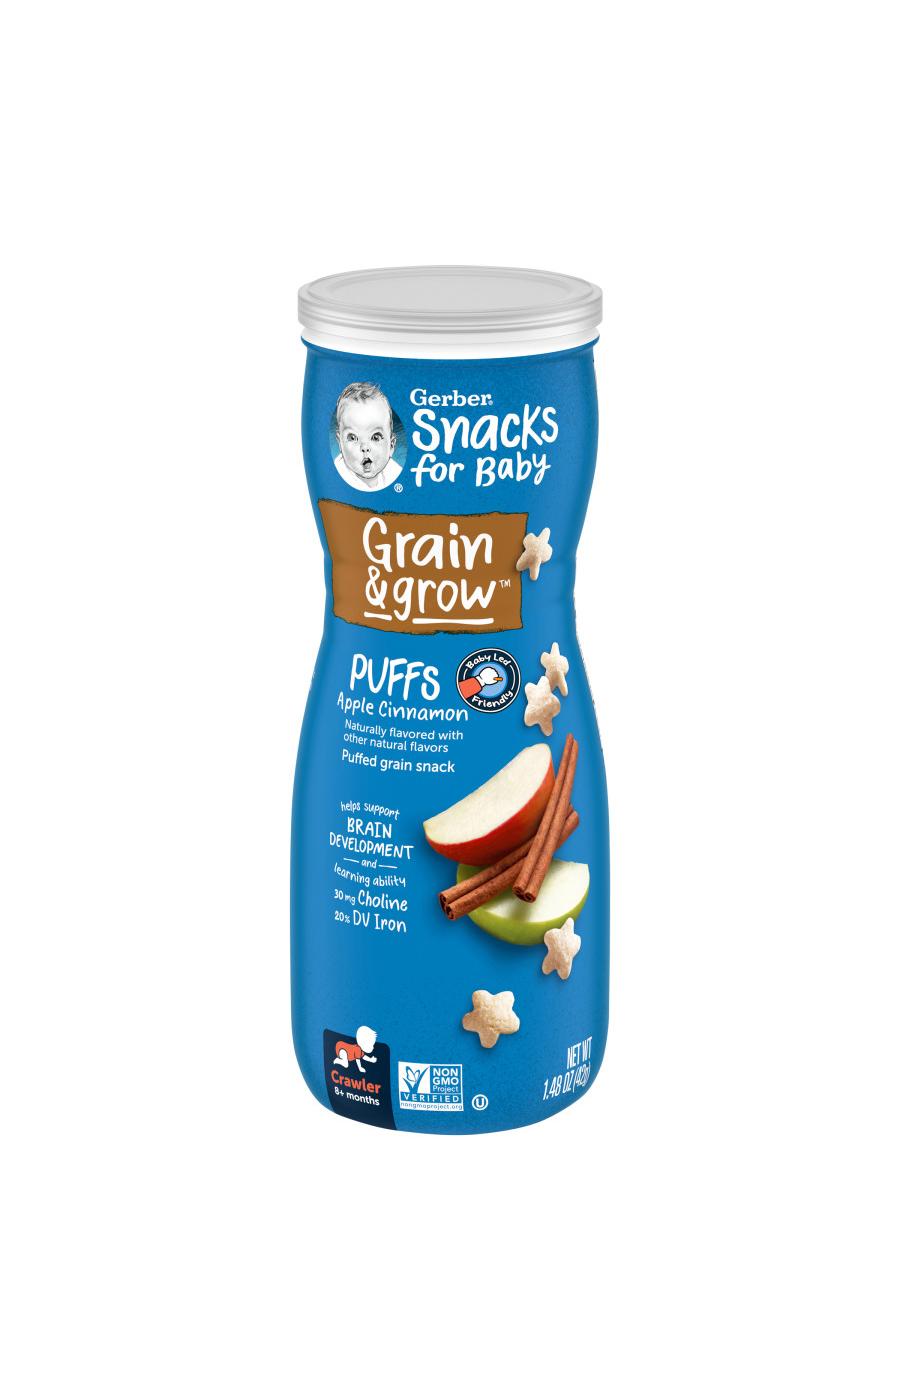 Gerber Snacks for Baby Grain & Grow Puffs - Apple Cinnamon; image 1 of 8